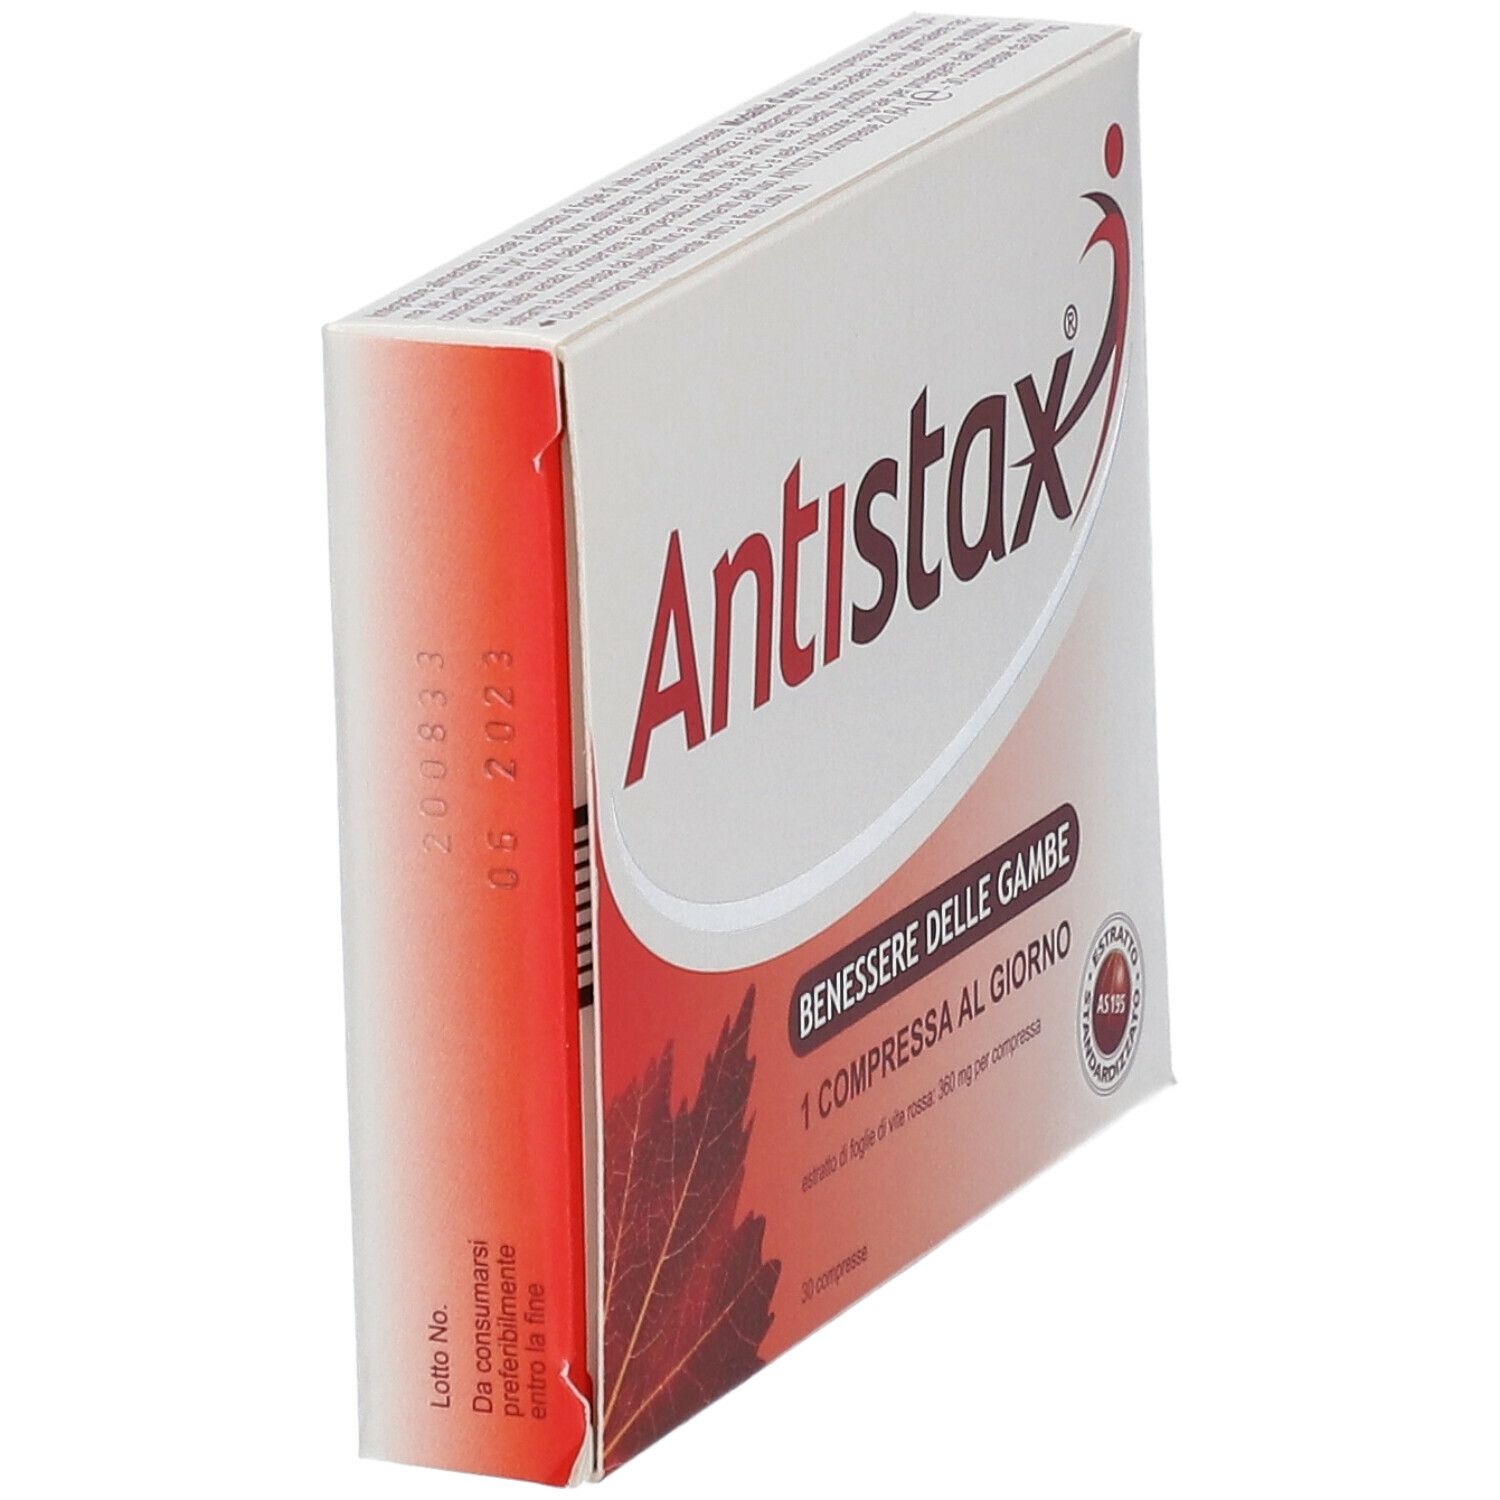 Antistax® Compresse